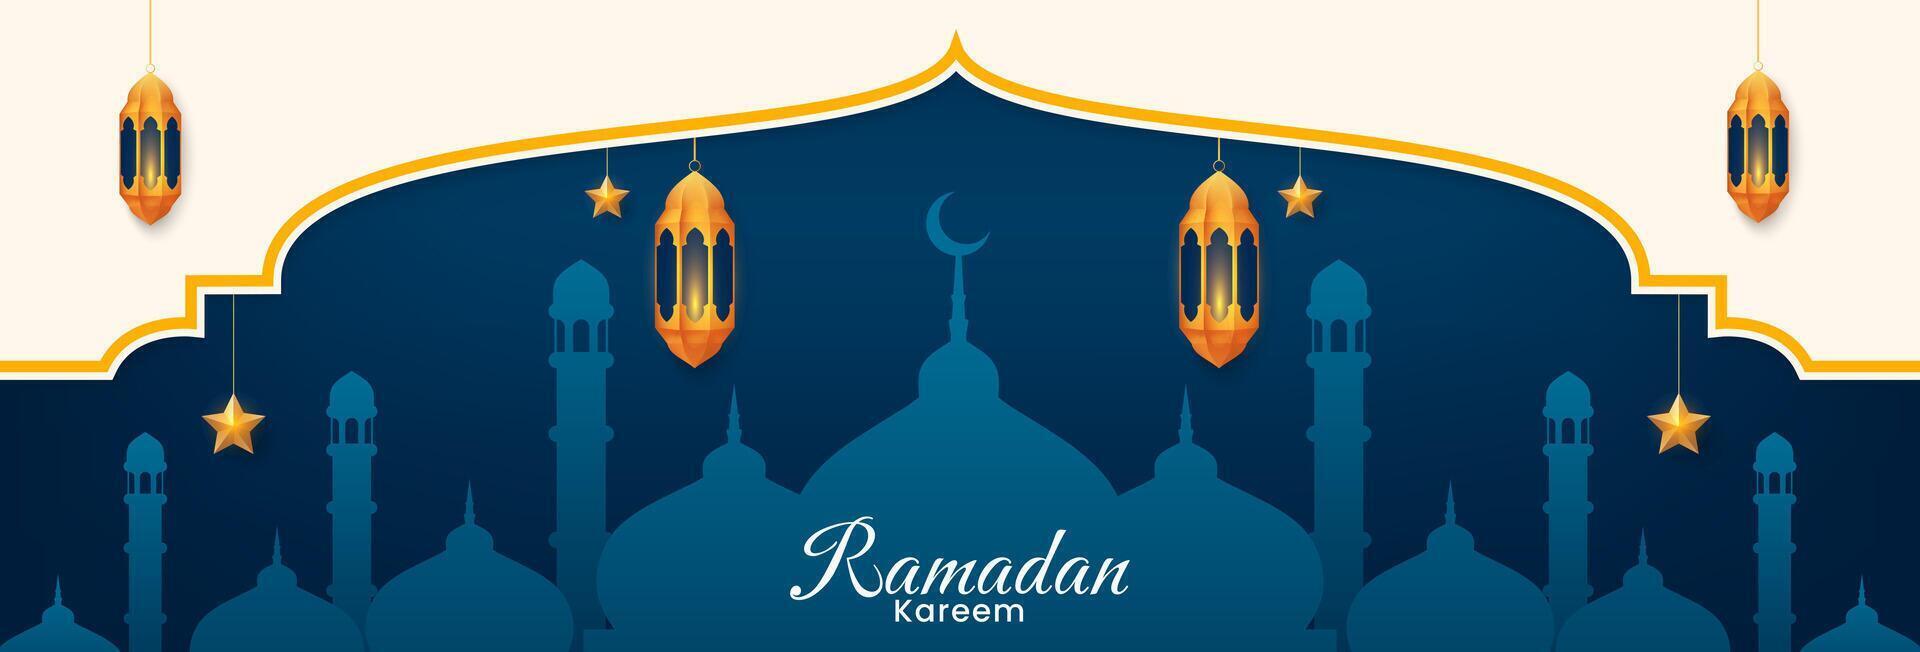 Islamic Ramadan Kareem background design with gold lanterns and mosque. Vector illustration